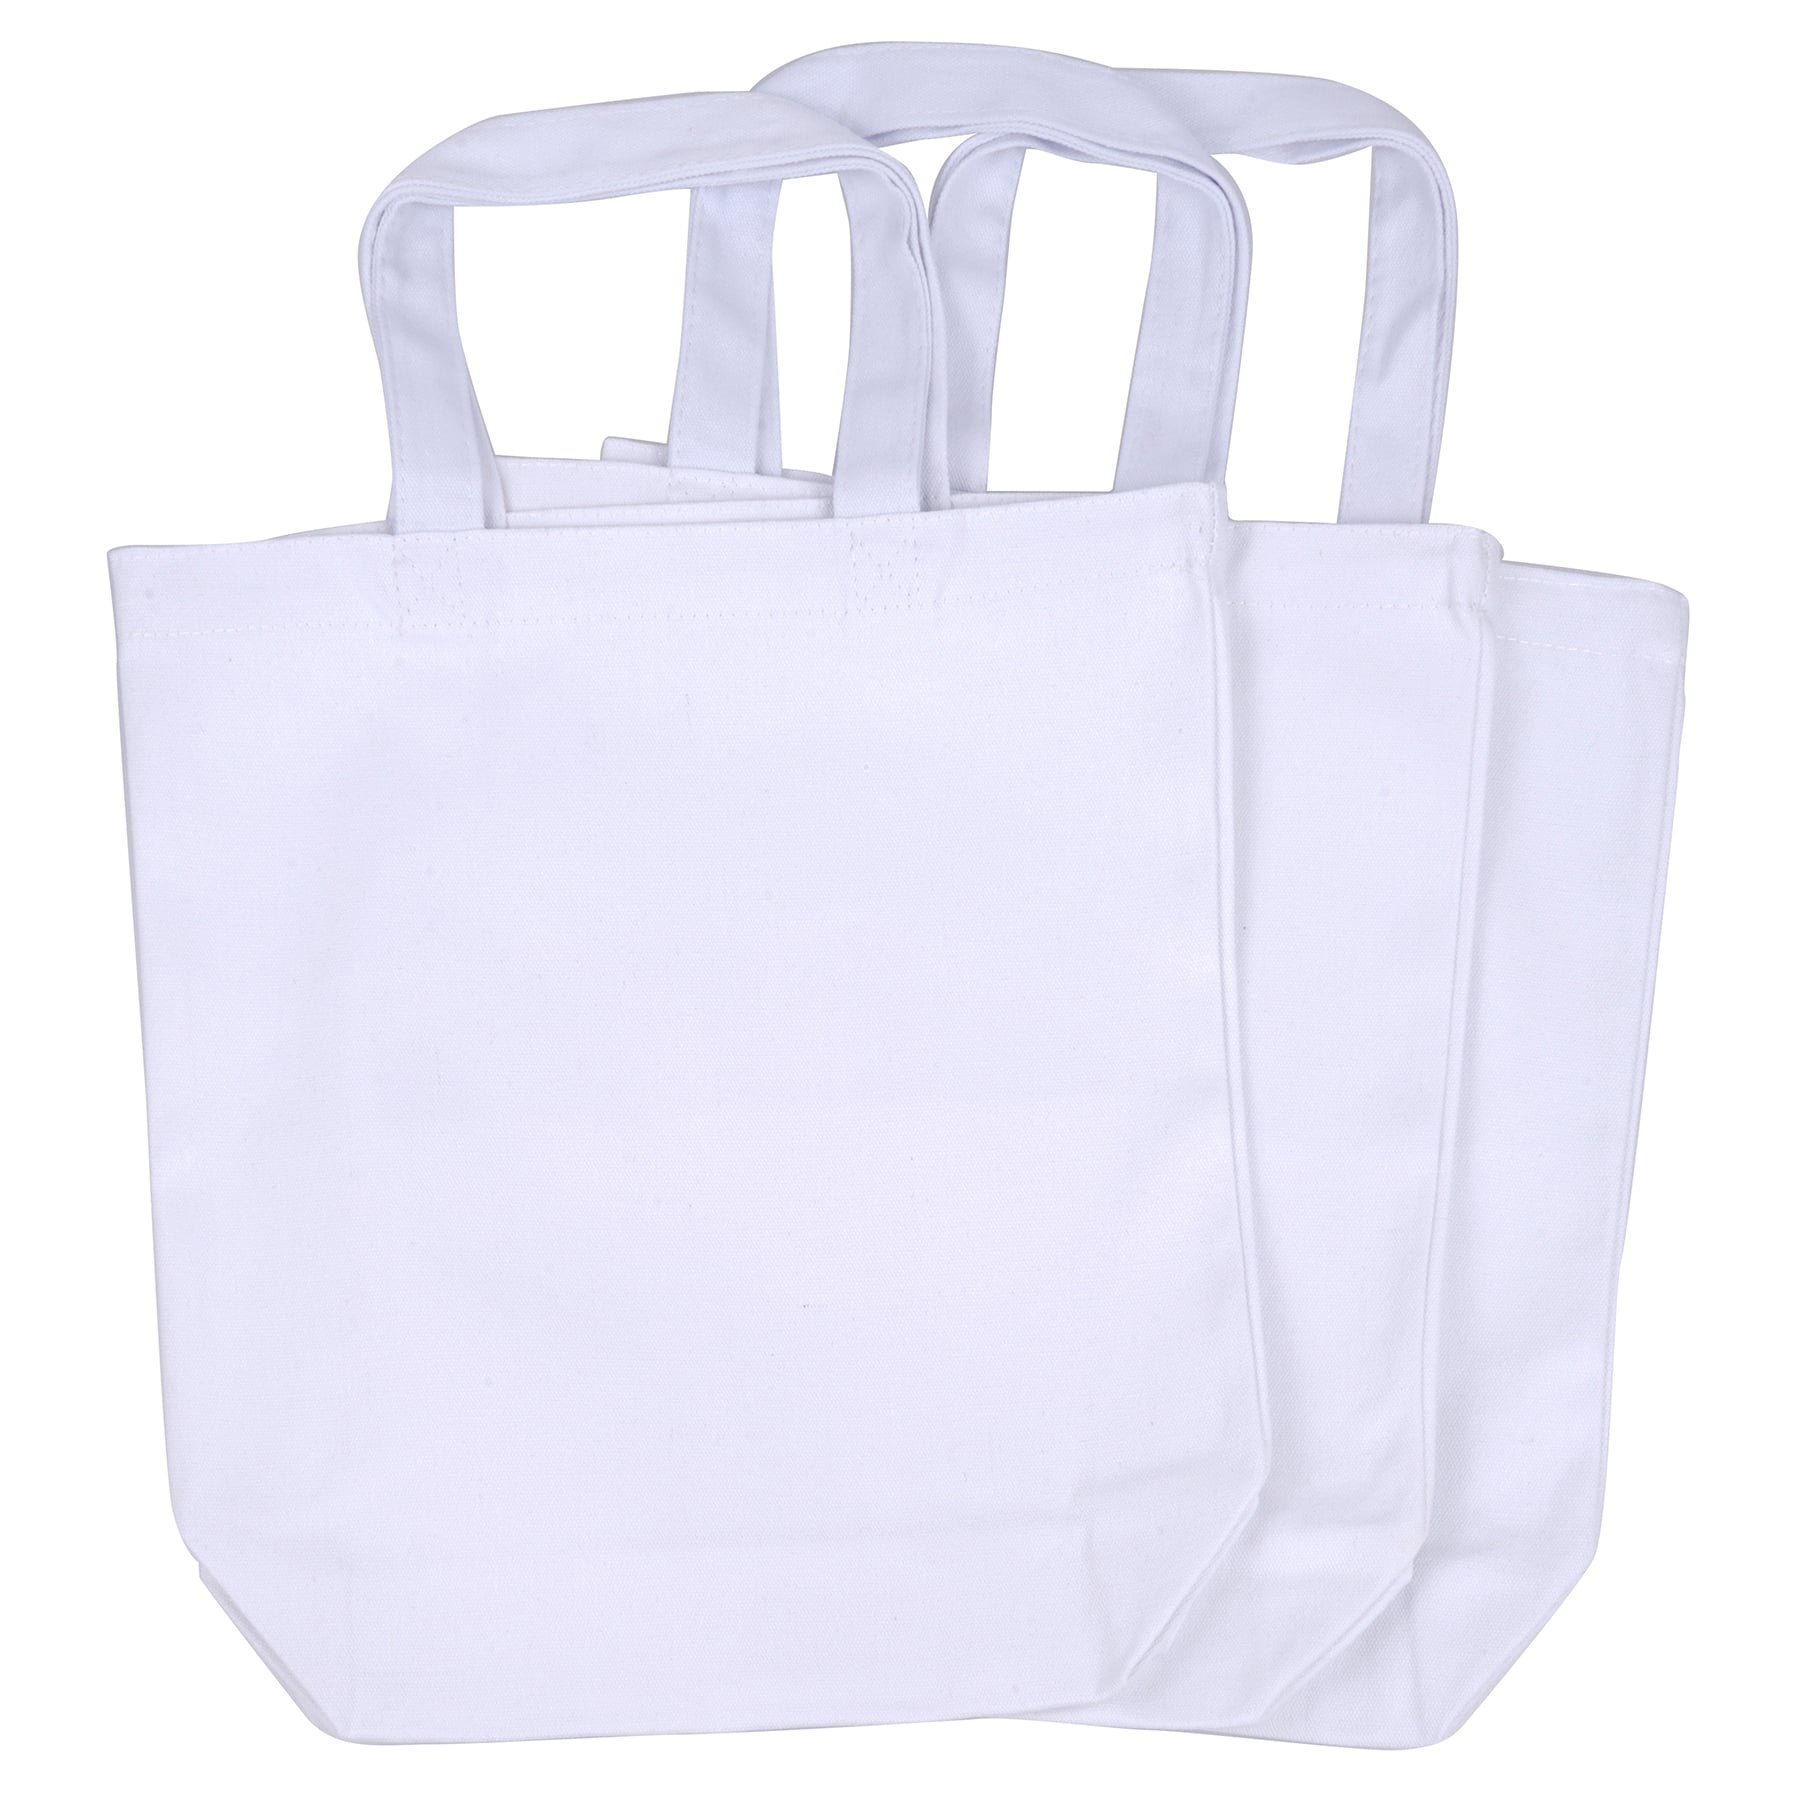 White Cotton Tote Bags, 3ct. by Make Market®